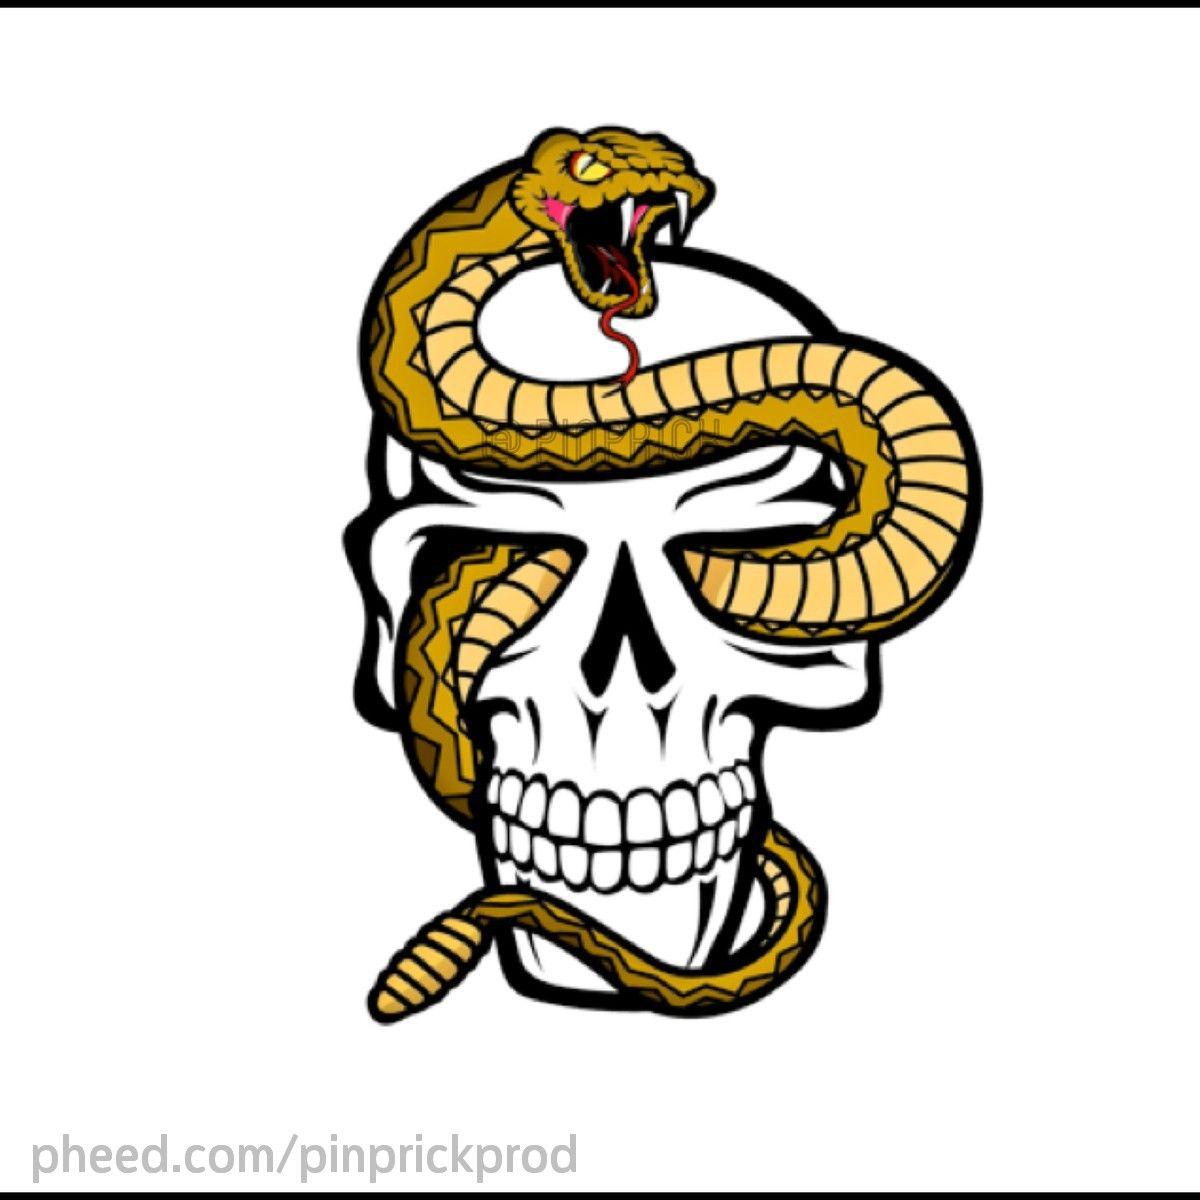 Snake Head Logo - Free Viper Head Drawing, Download Free Clip Art, Free Clip Art on ...